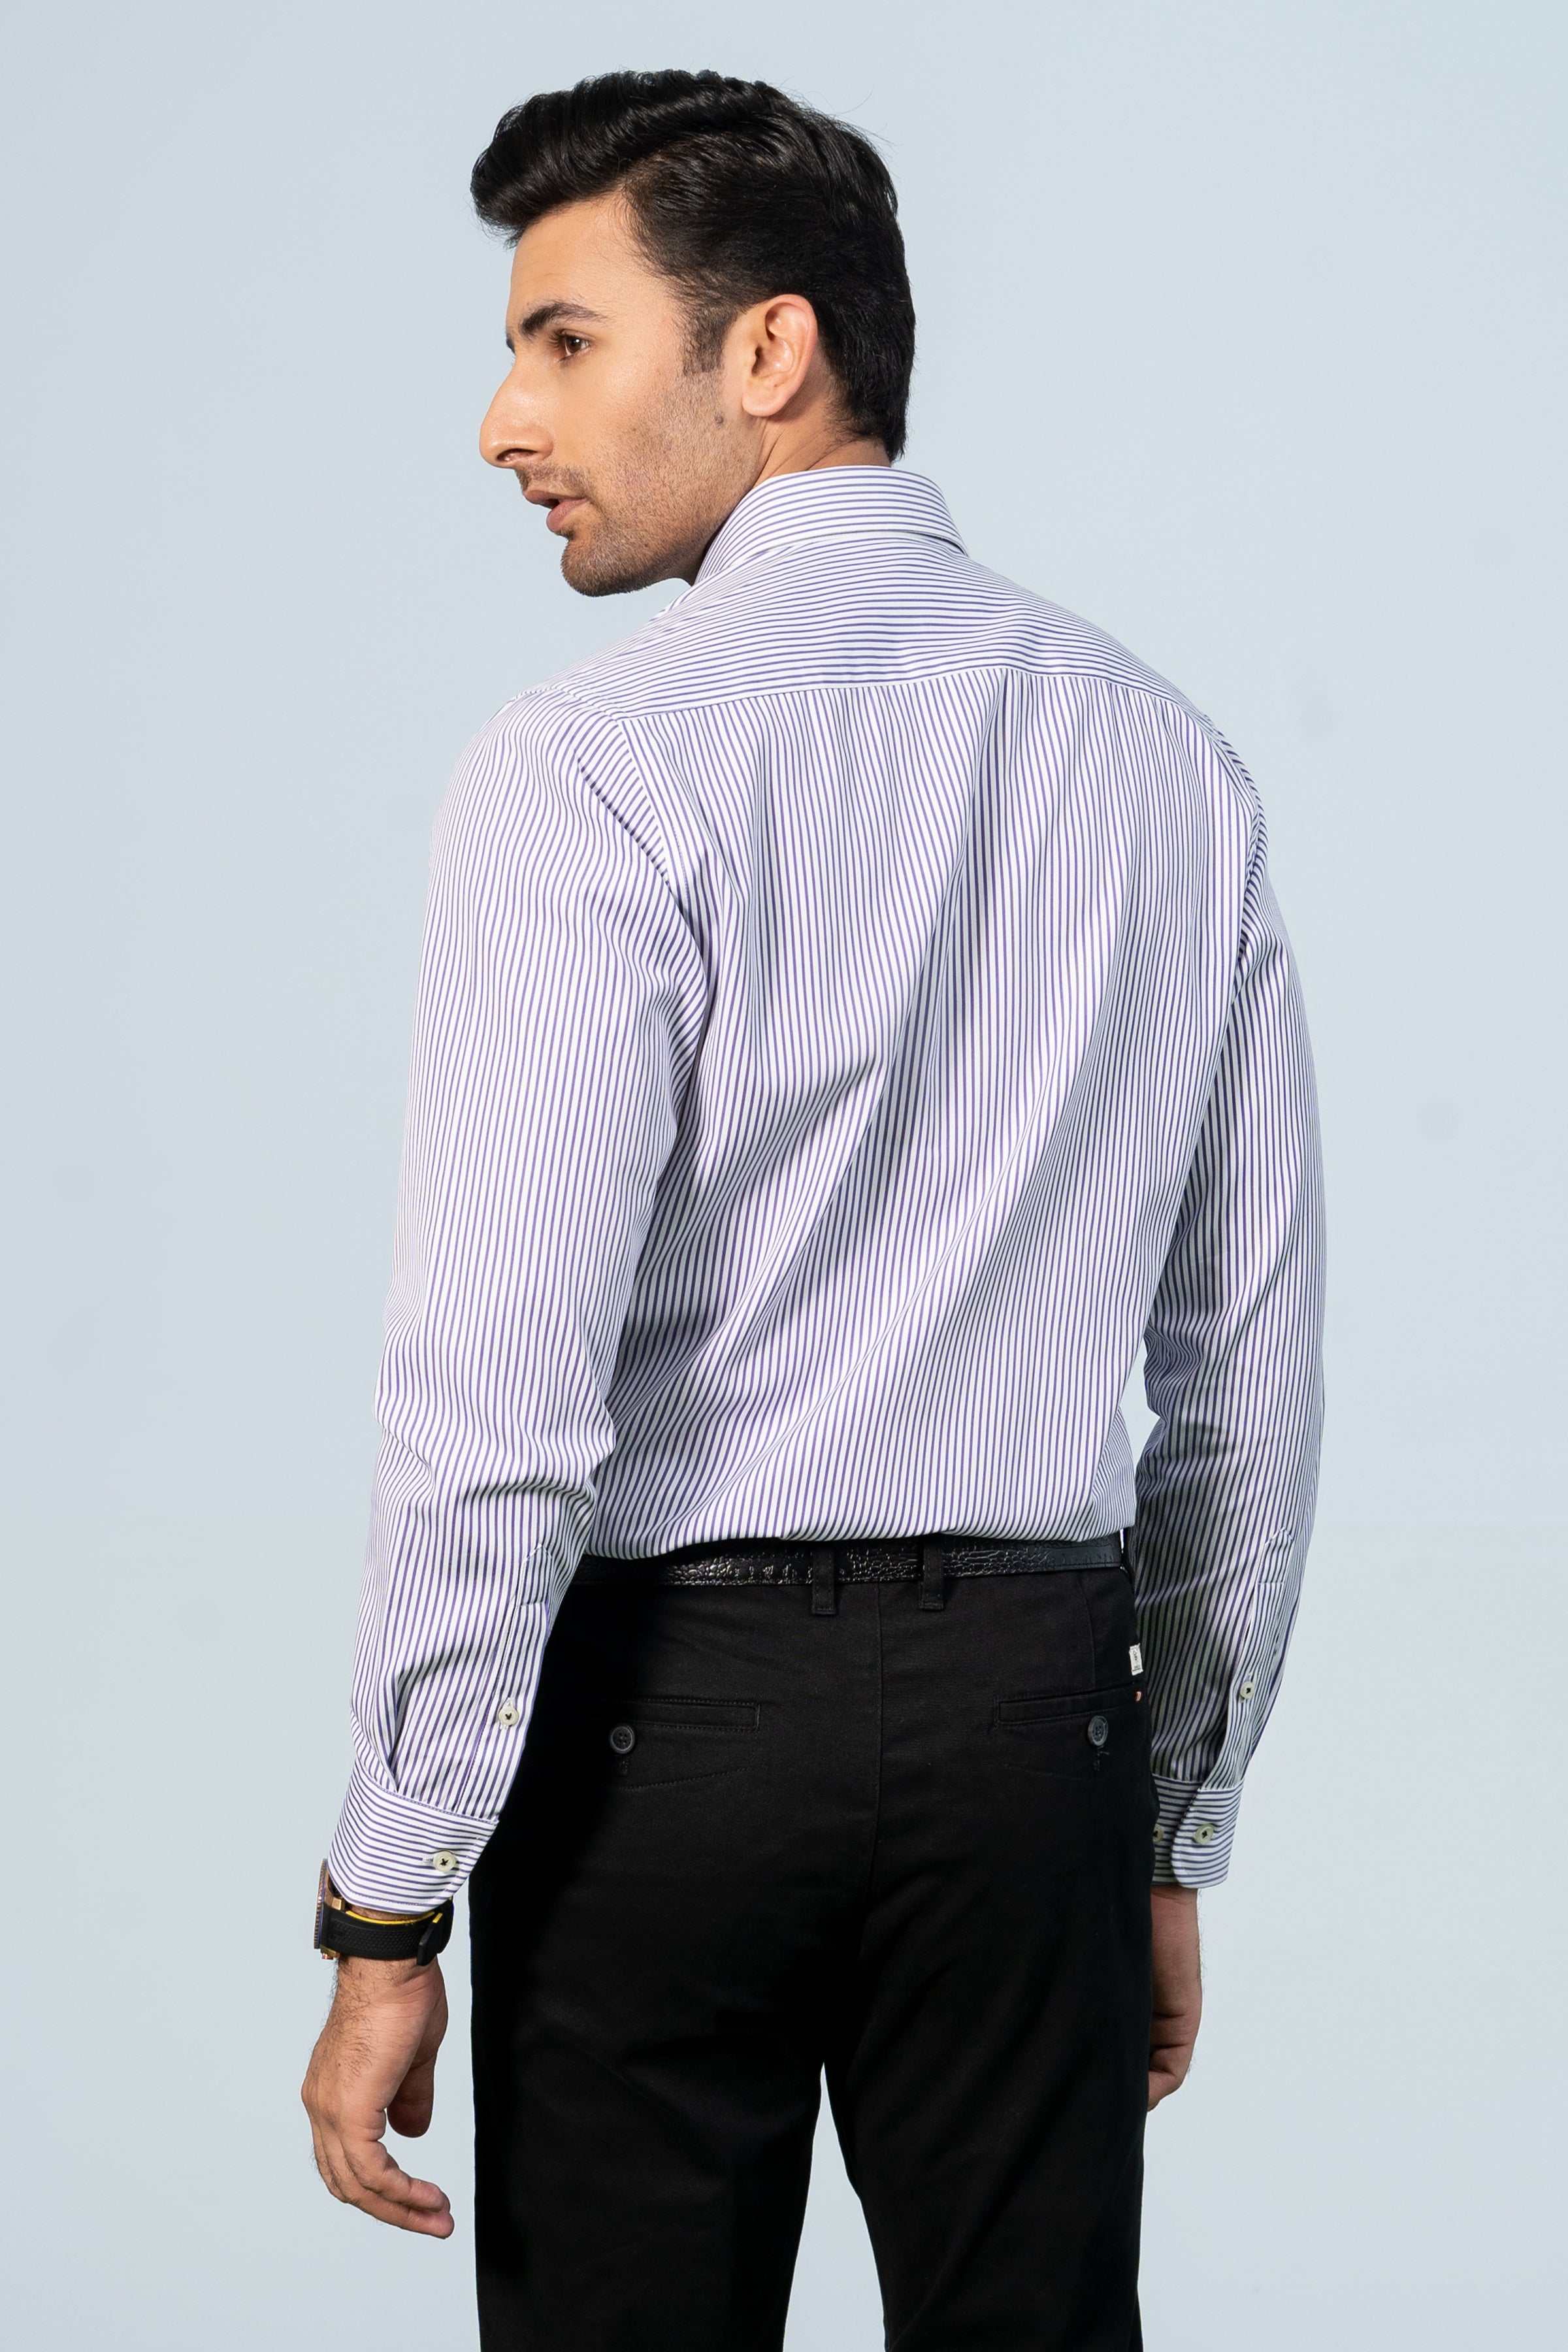 SEMI FORMAL PURPLE WHITE - Charcoal Clothing